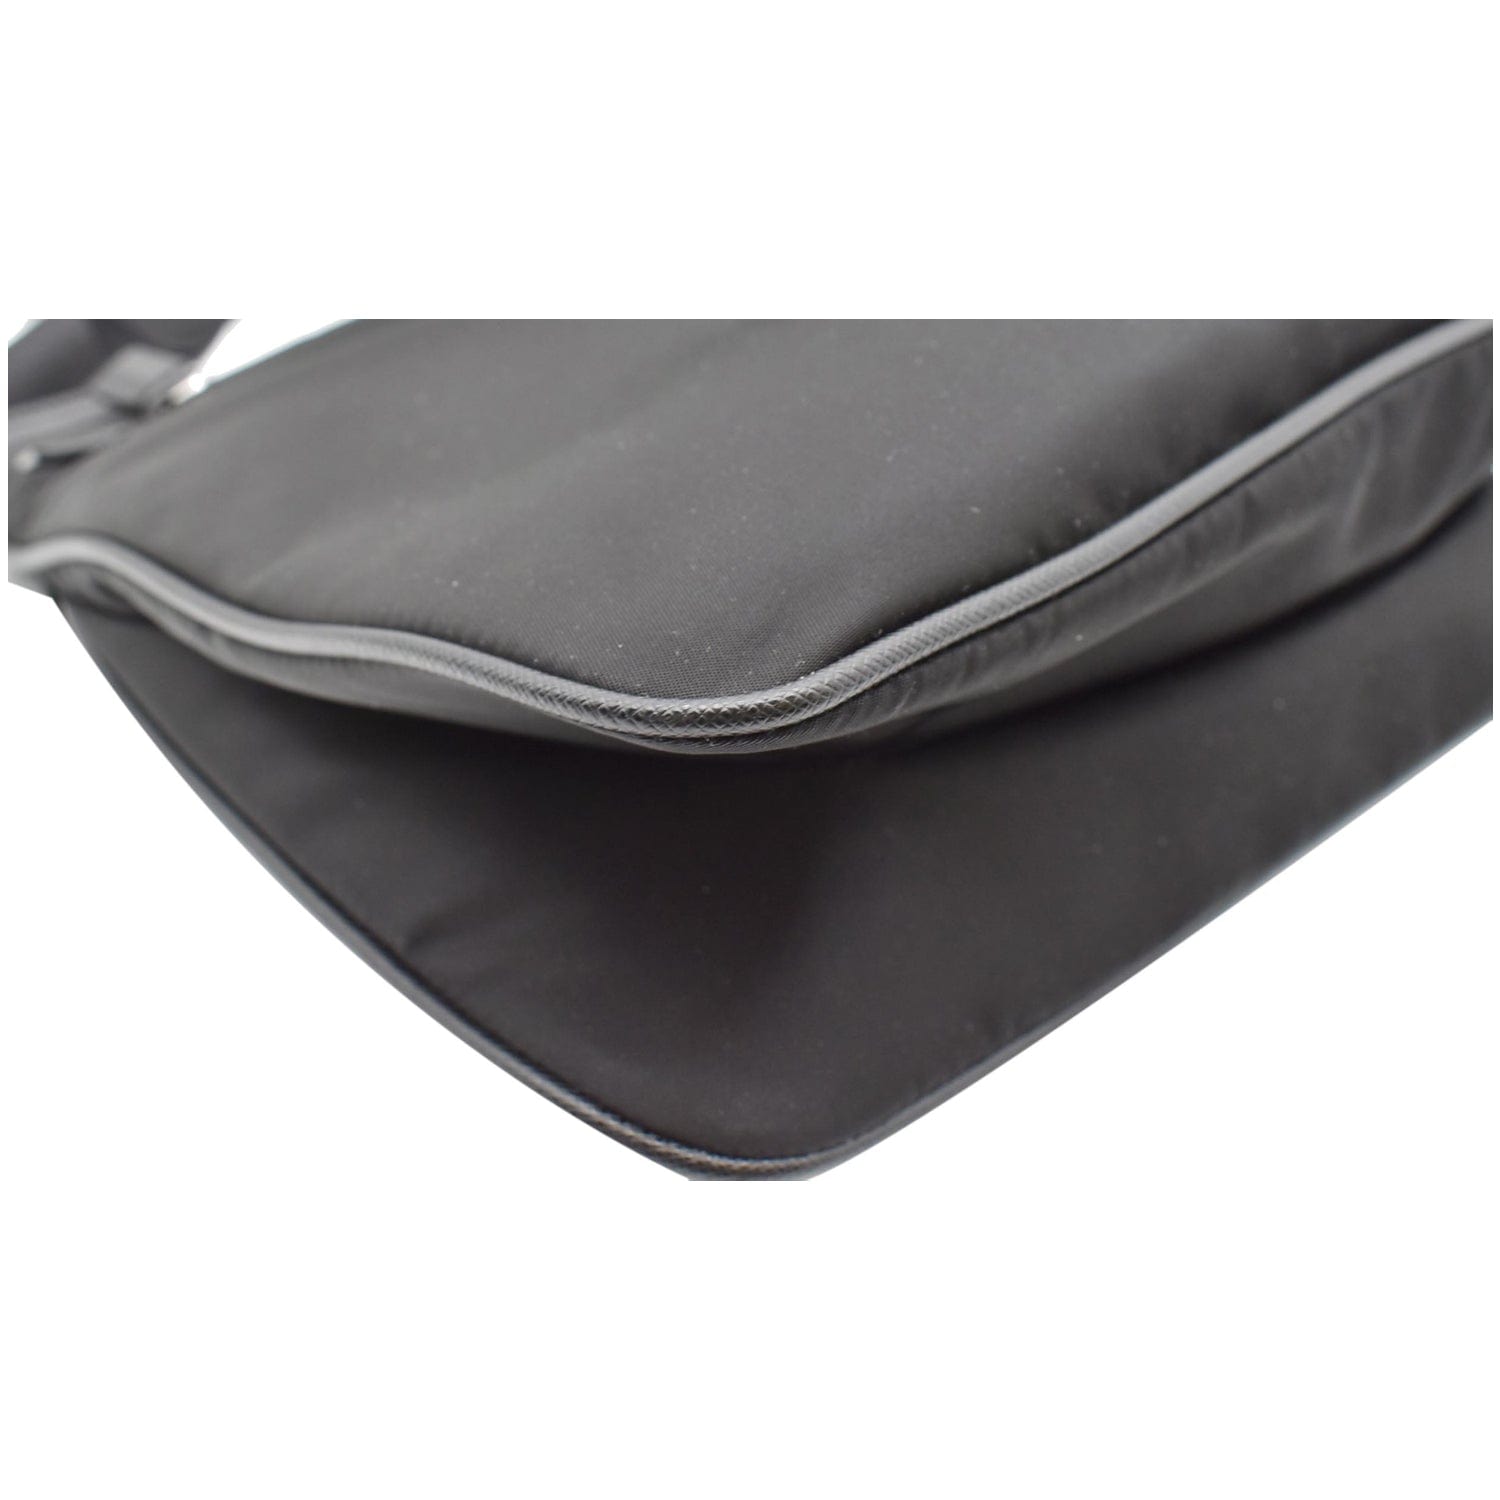 Nylon And Saffiano Leather Crossbody Bag